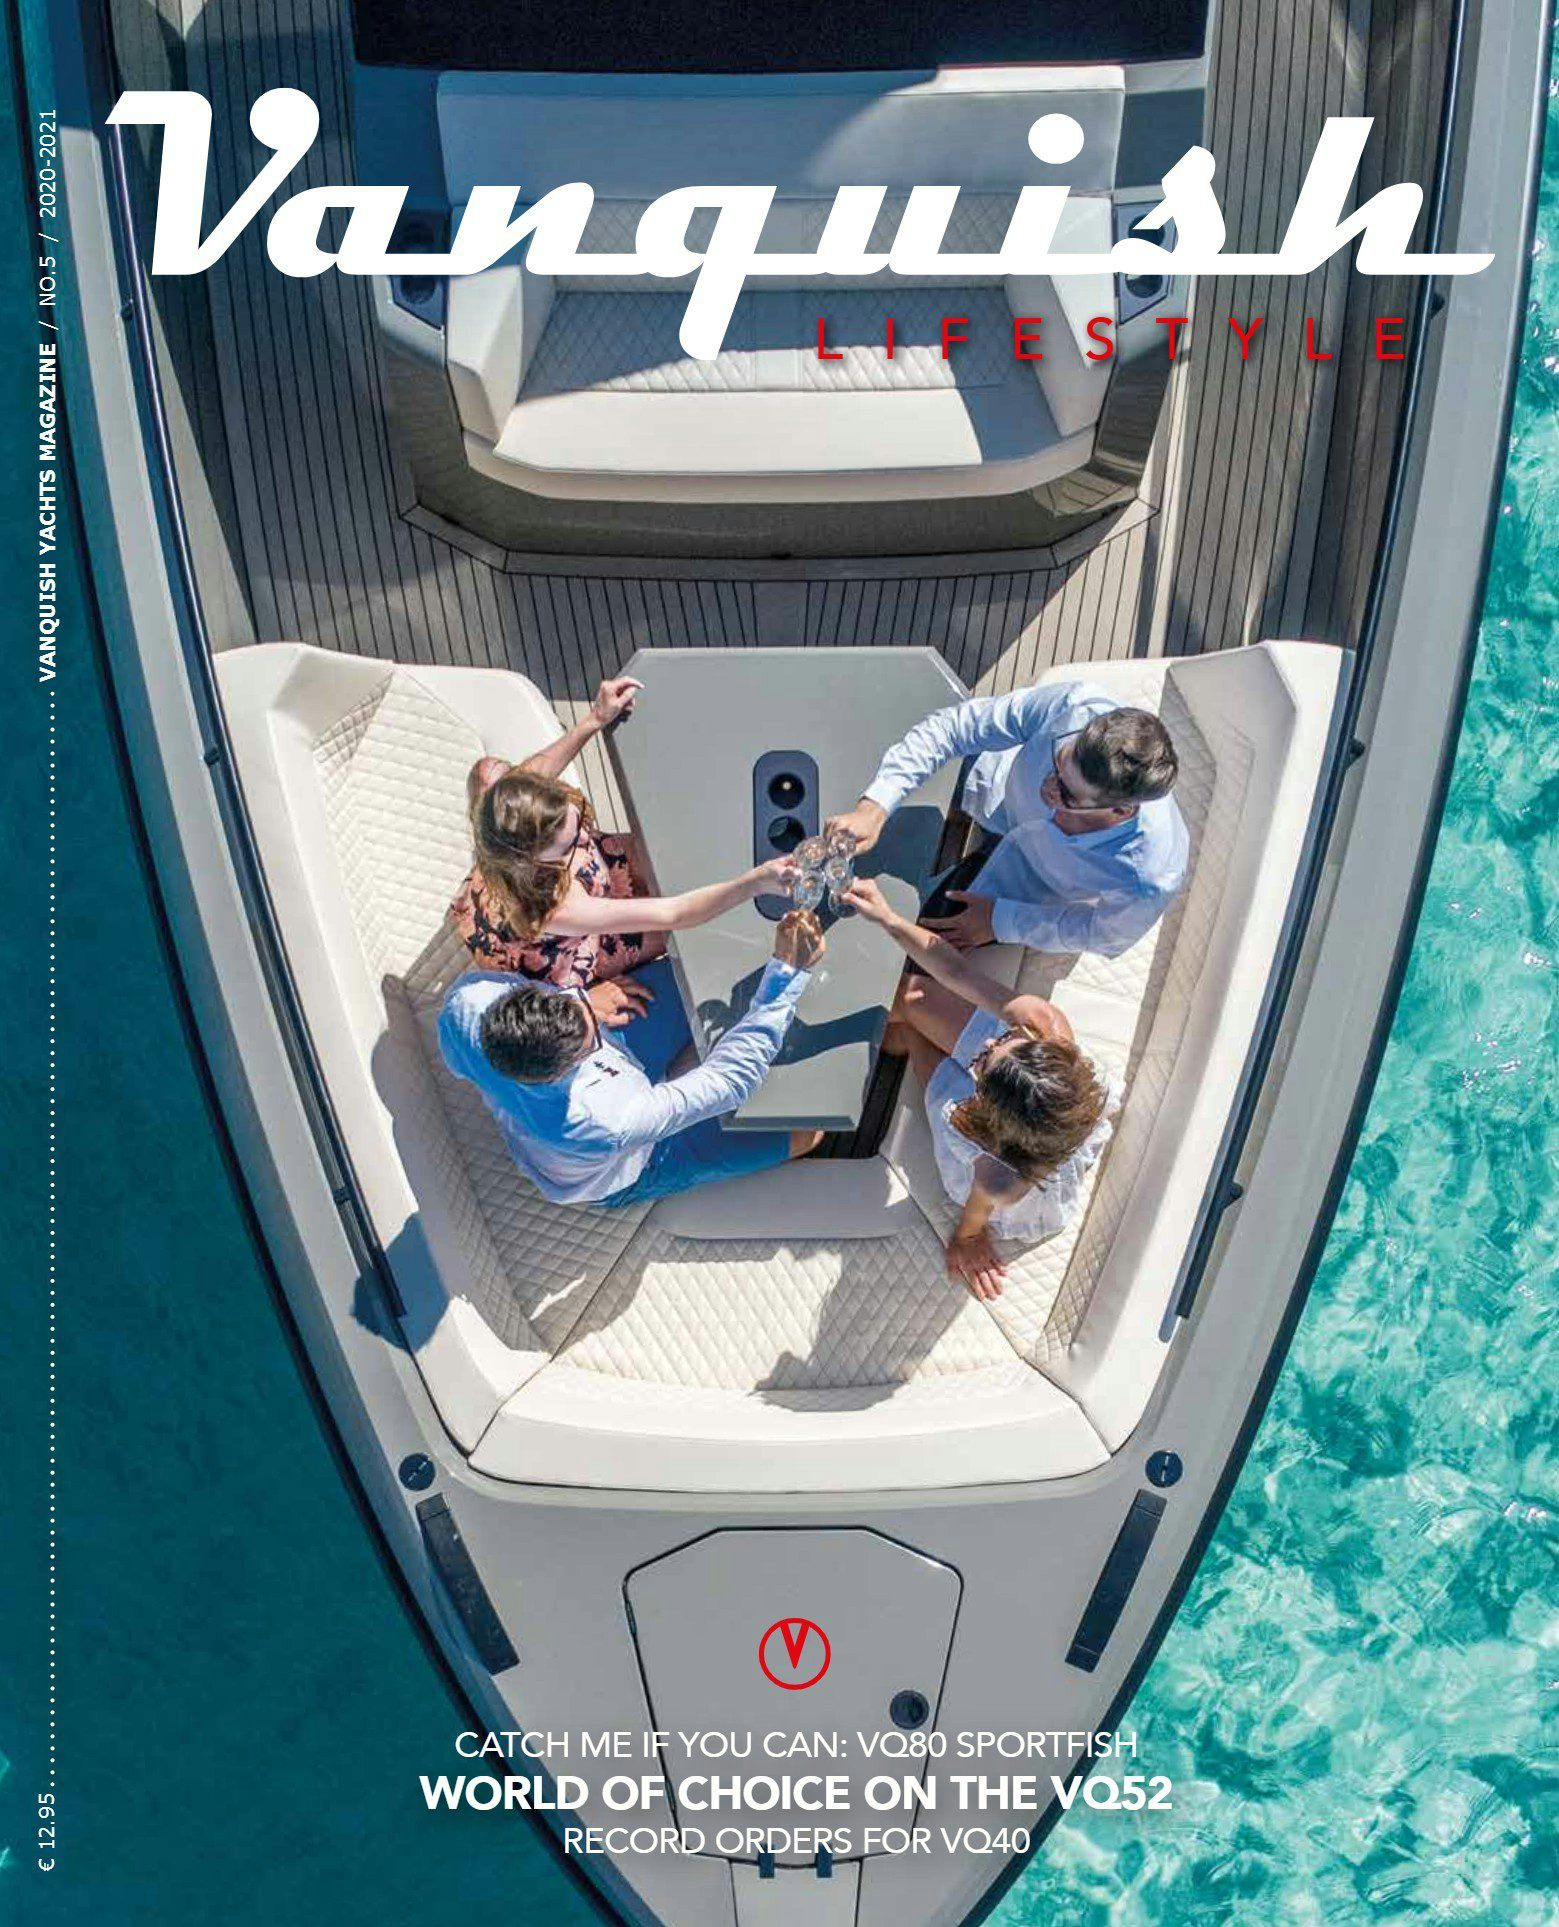 Vanquish lifestyle magazine cover 2020/2021